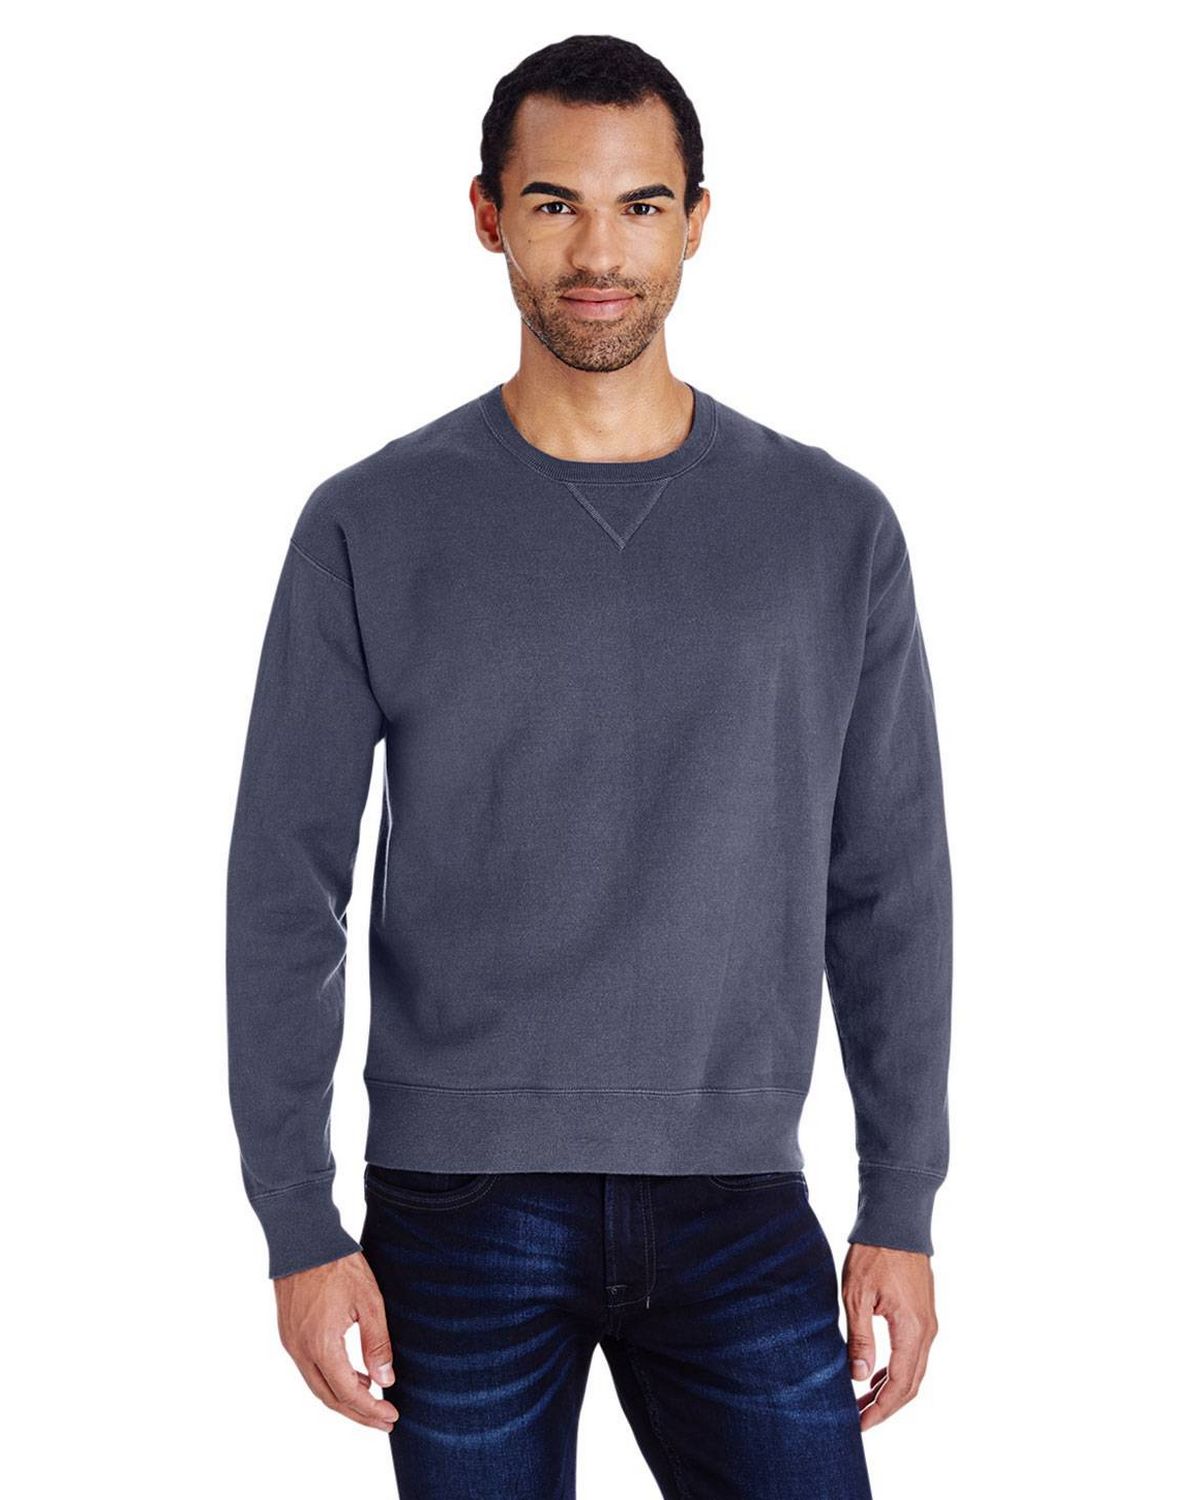 Hanes Unisex Crewneck Sweatshirt Size Chart